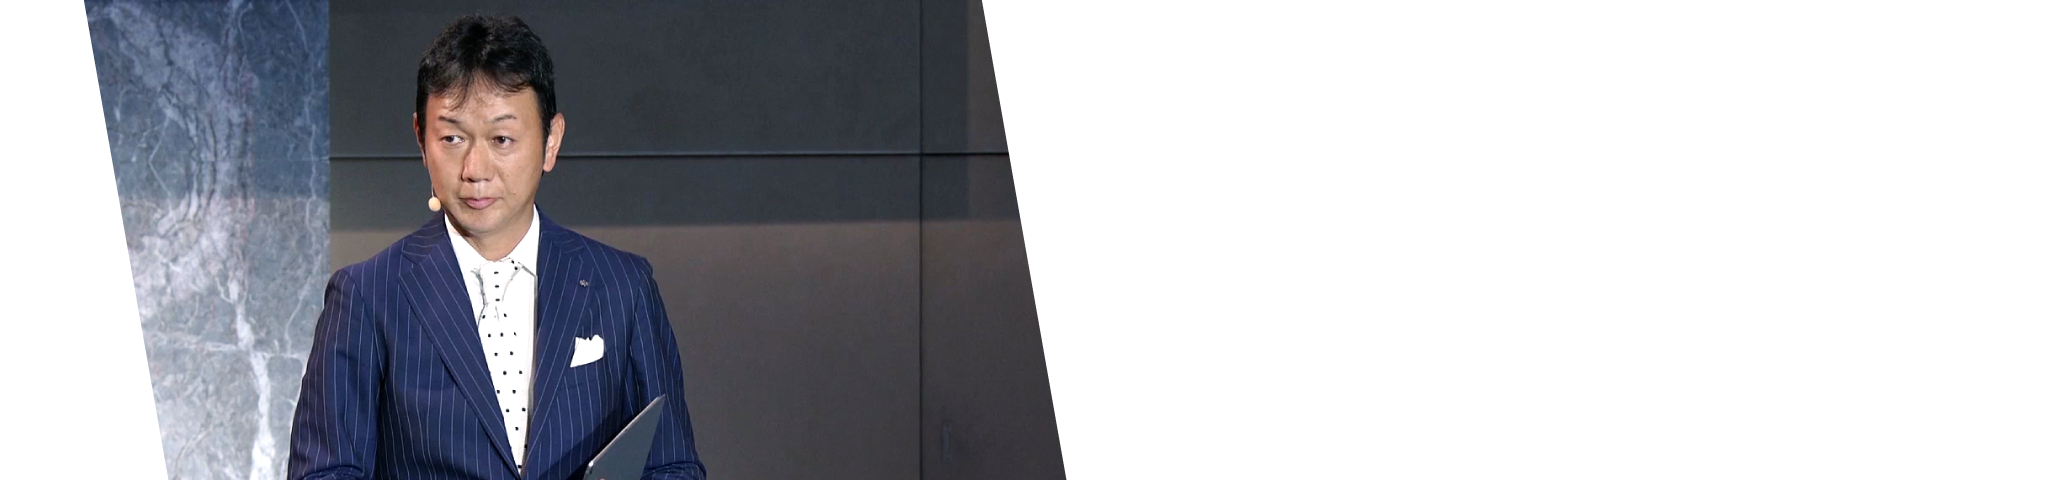 PS事業 IPと流通の強みを生かしPS事業基盤を強化 専務取締役 PS事業統括本部長 吉田永